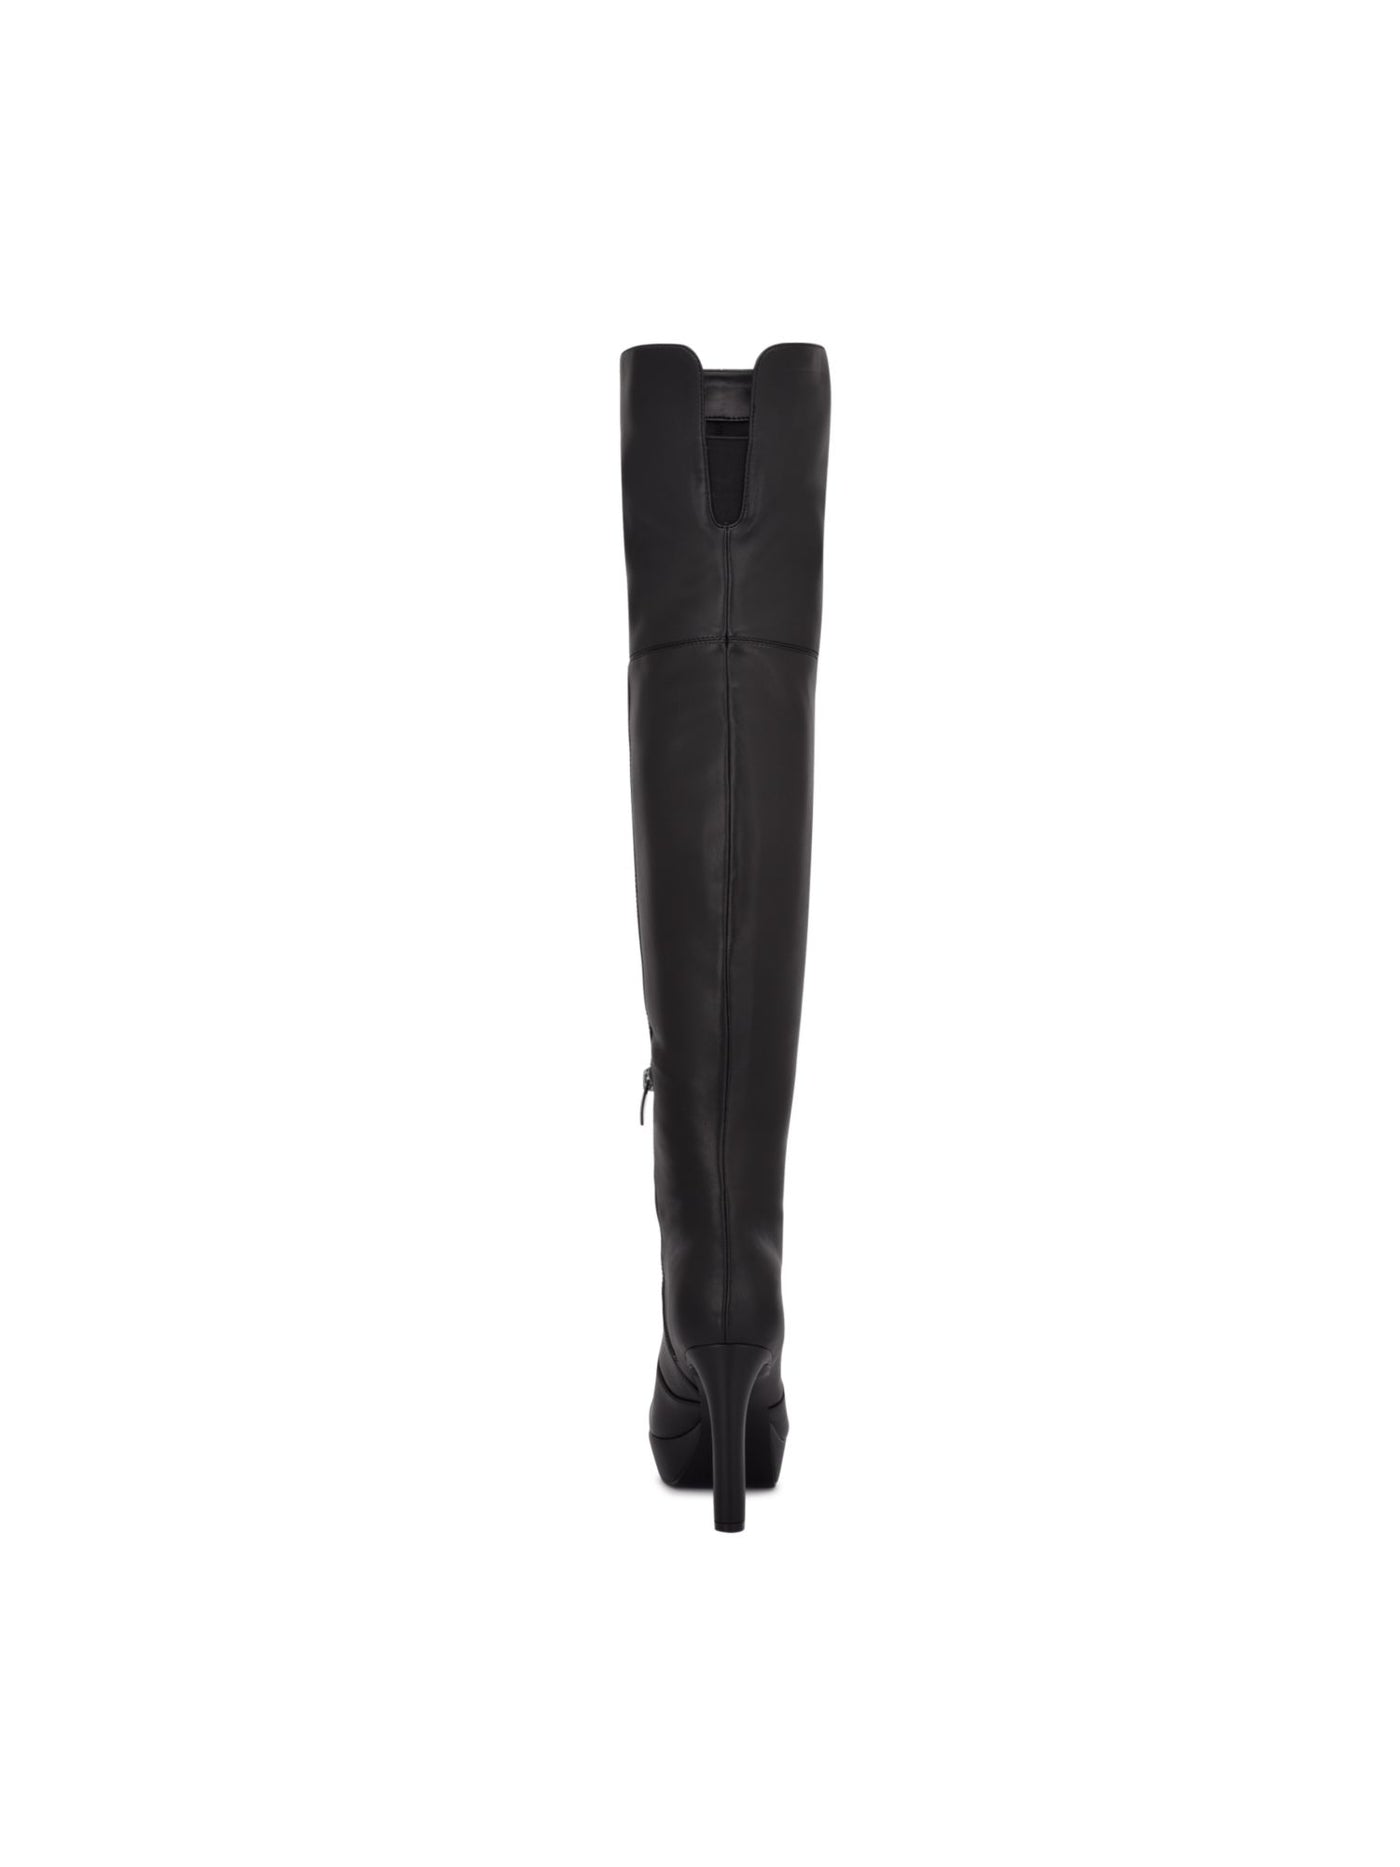 NINE WEST Womens Black 1" Platform Goring Padded Gotcha Round Toe Stiletto Zip-Up Heeled Boots 8 M